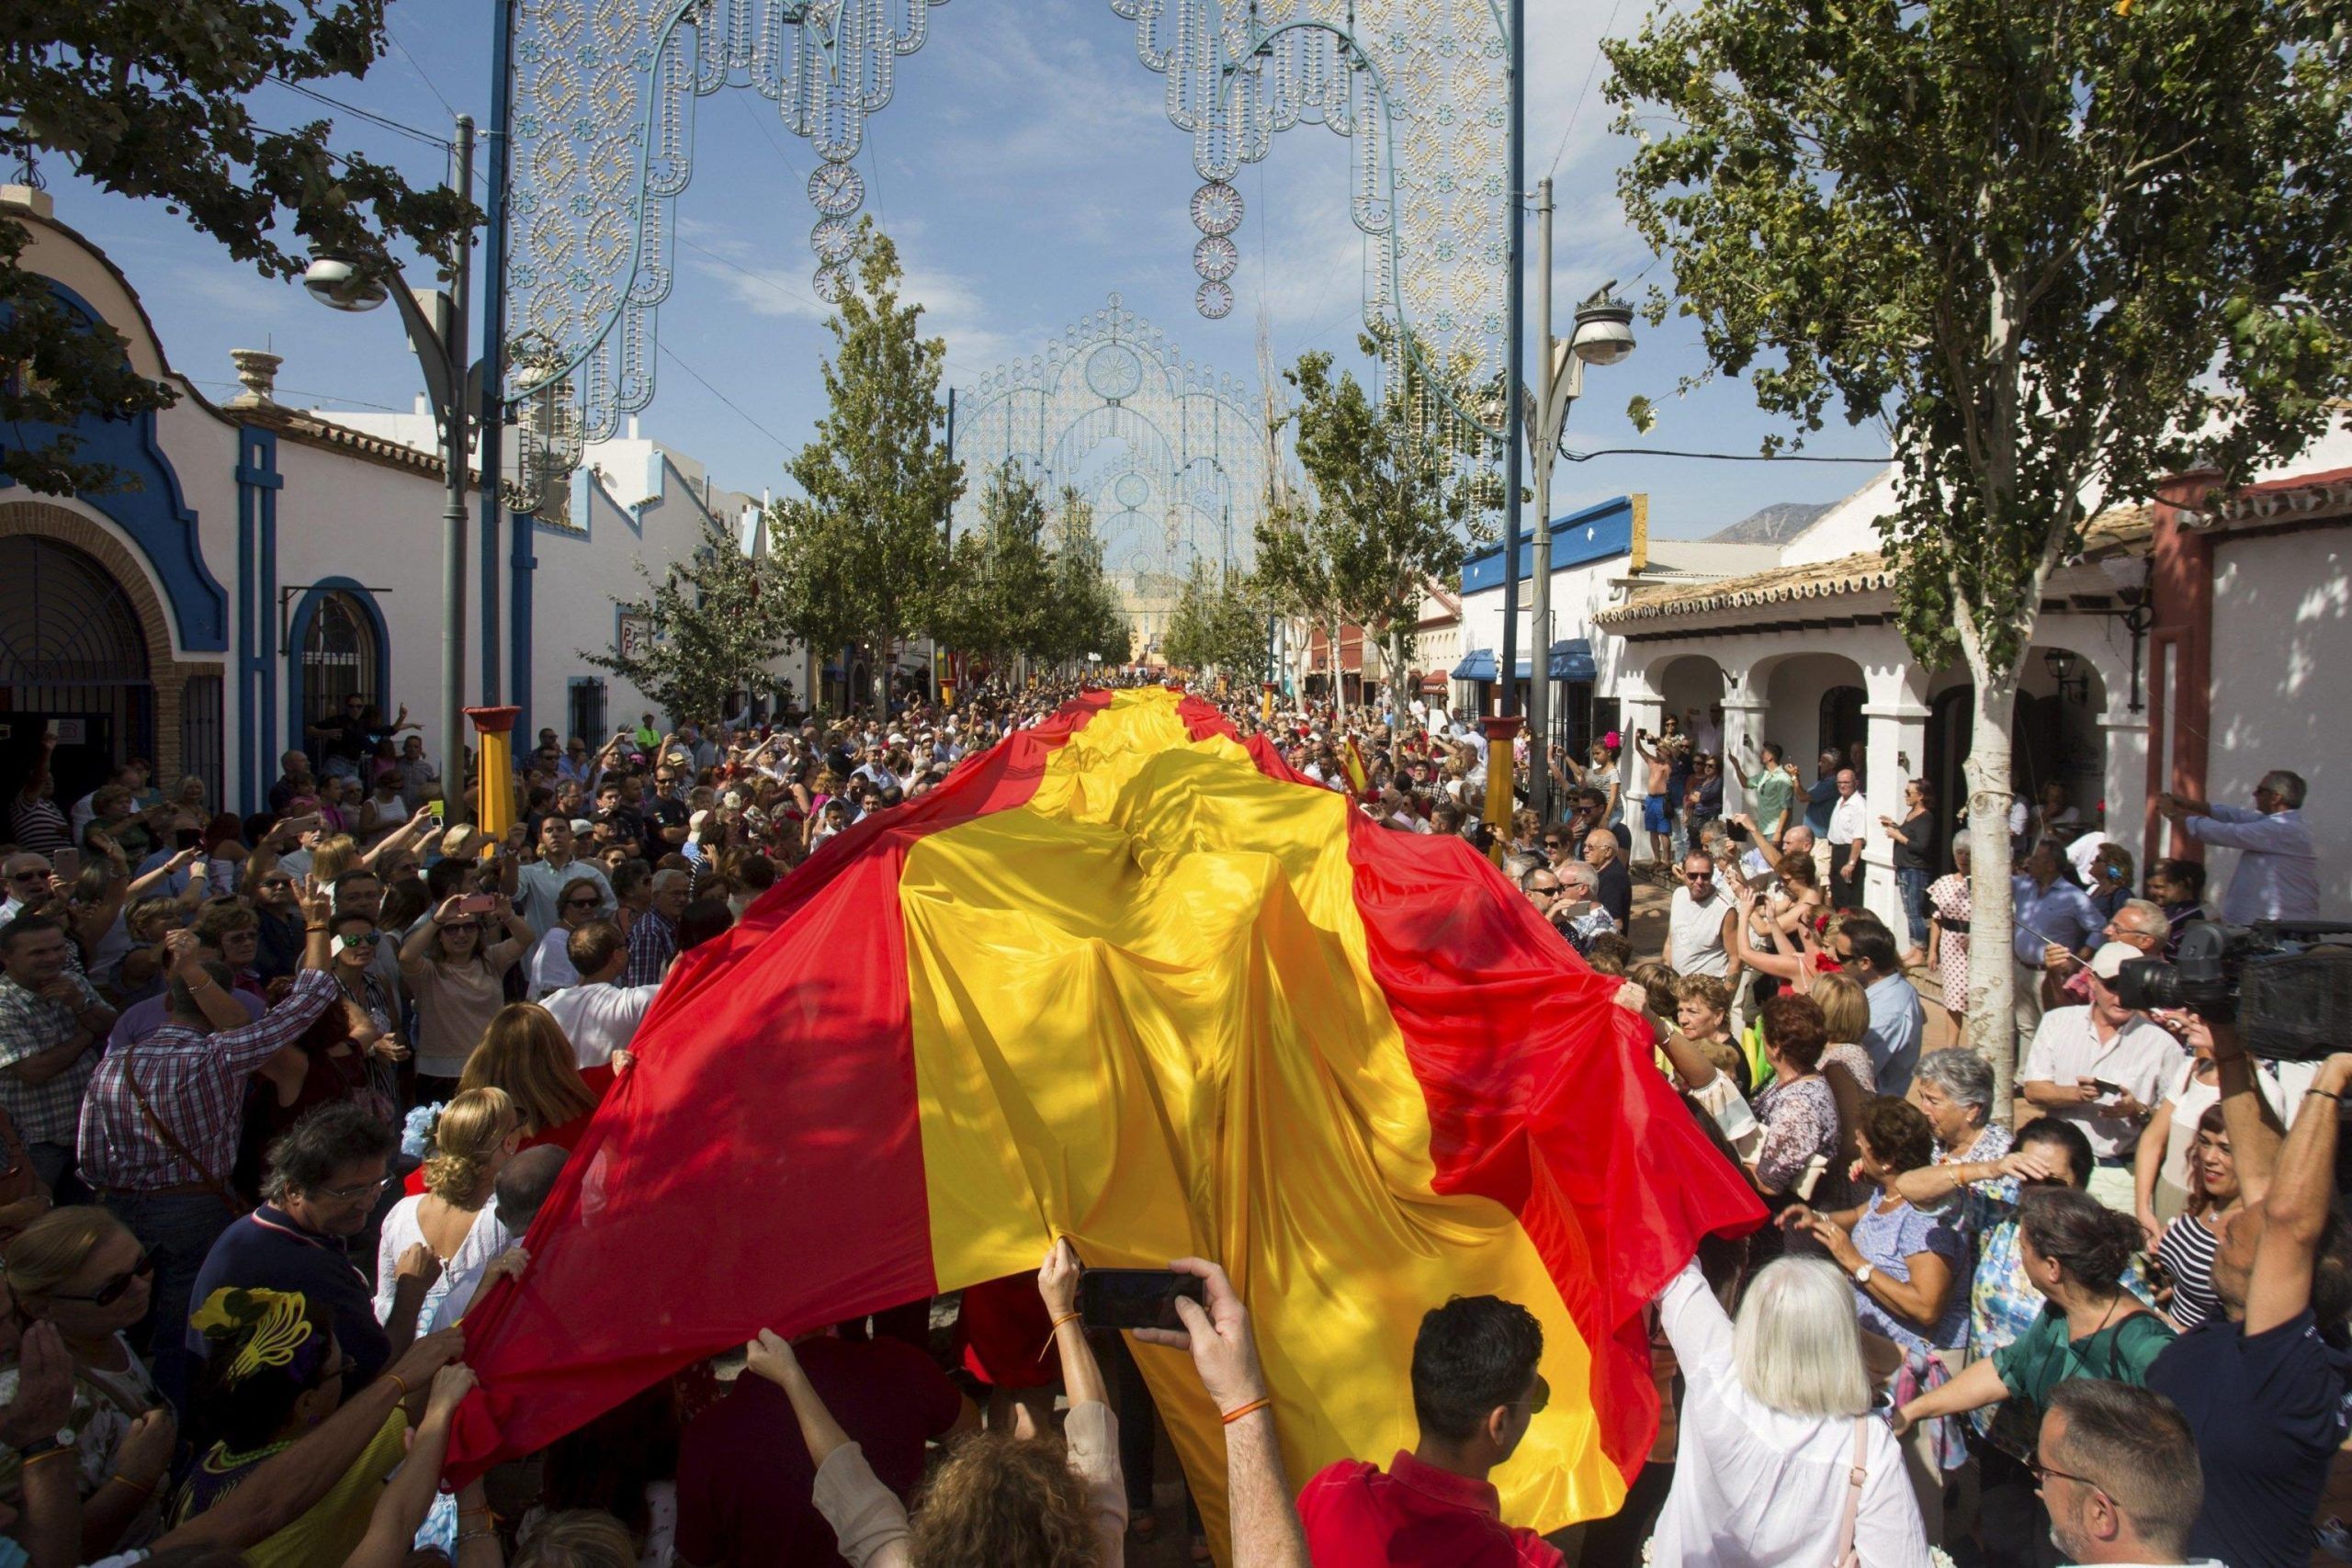 Spain's National Day celebration in Malaga